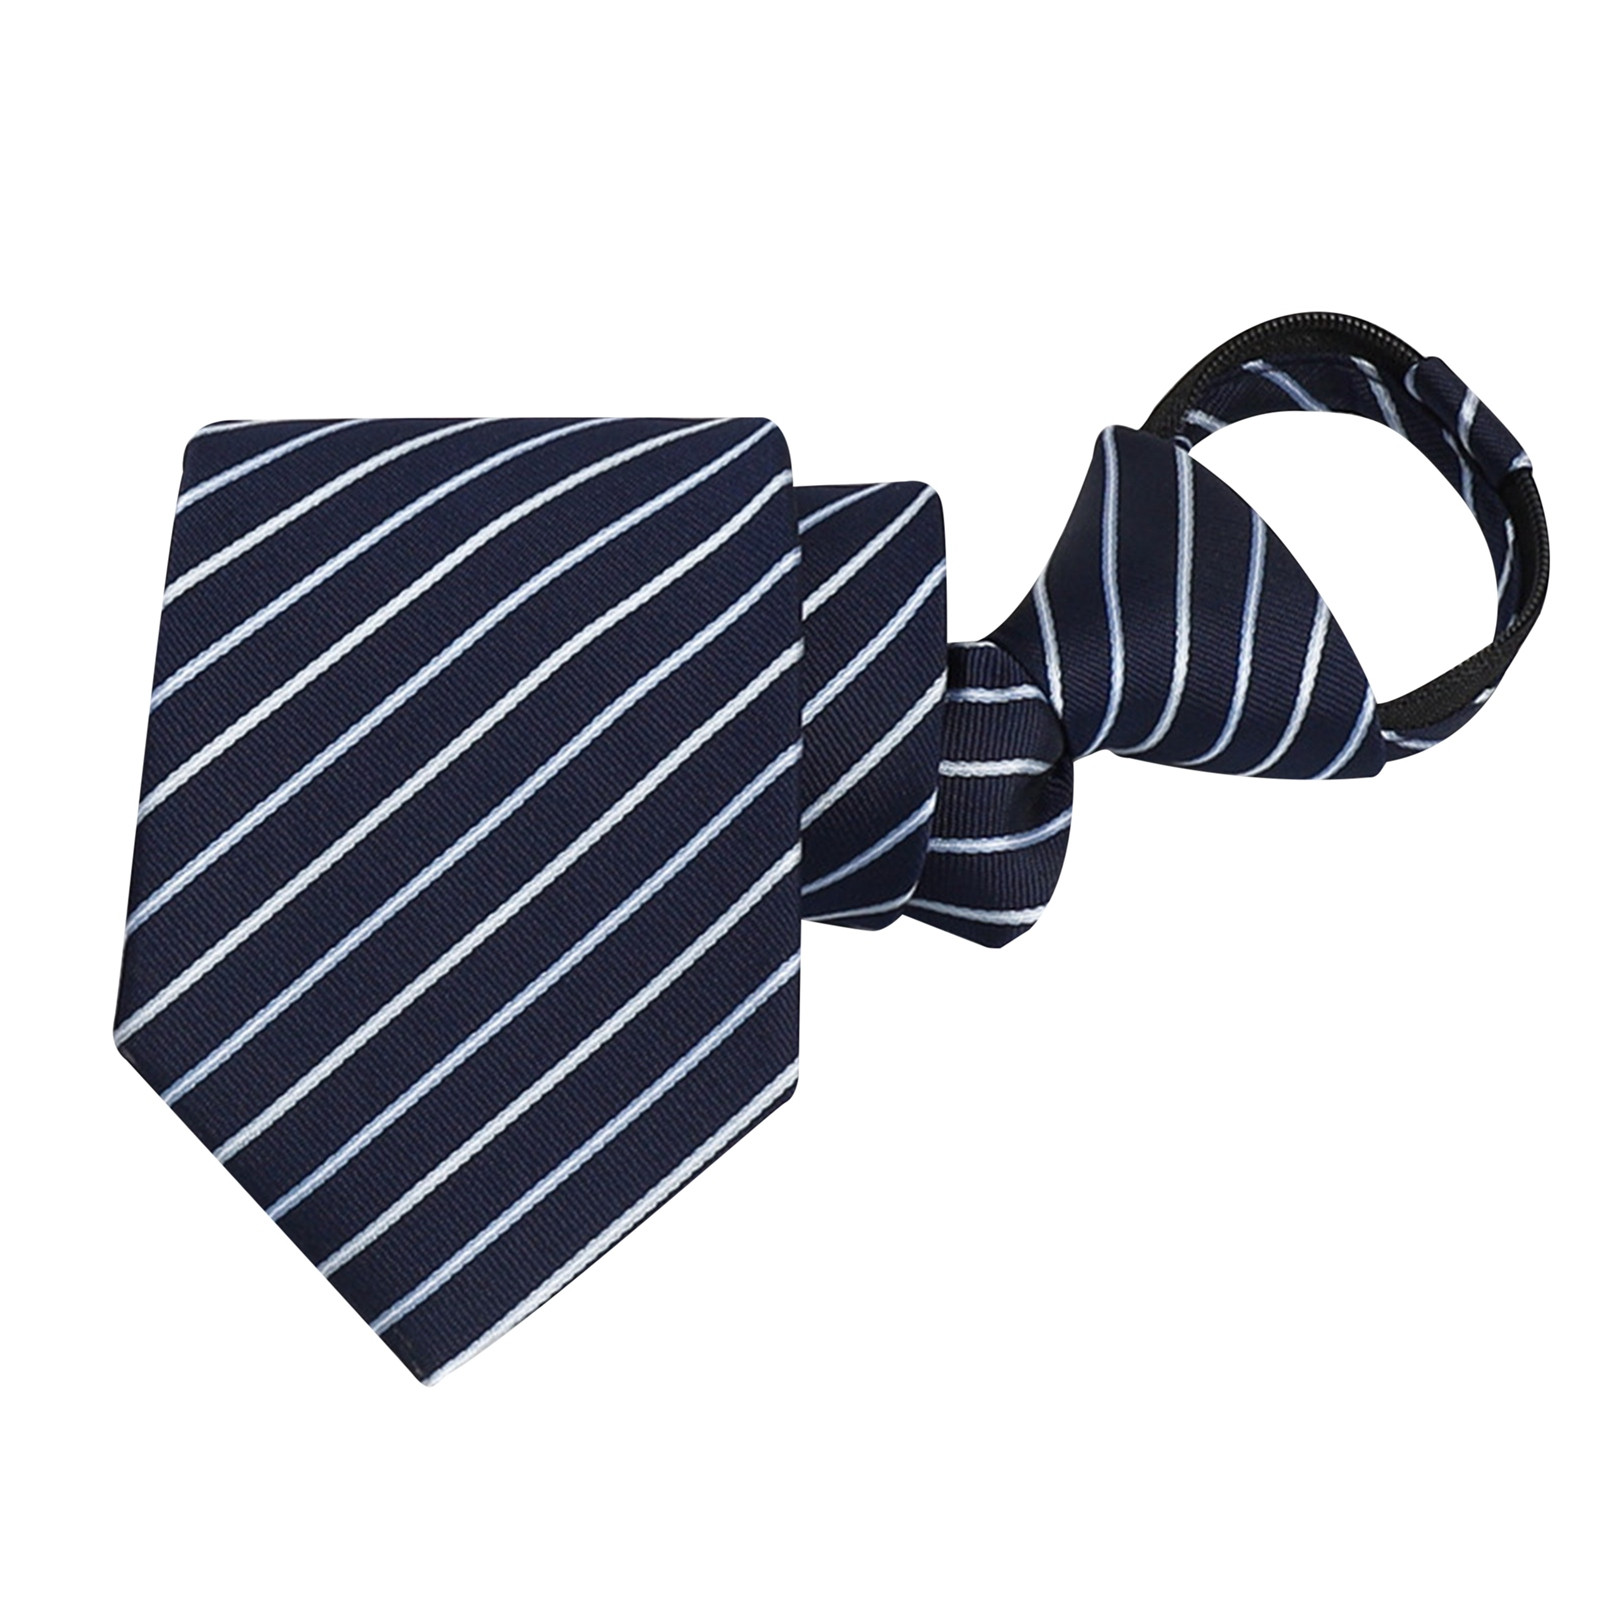 GDREDA Mens Ties Men's Zipper Tie Woven Jacquard Tie E,One Size ...